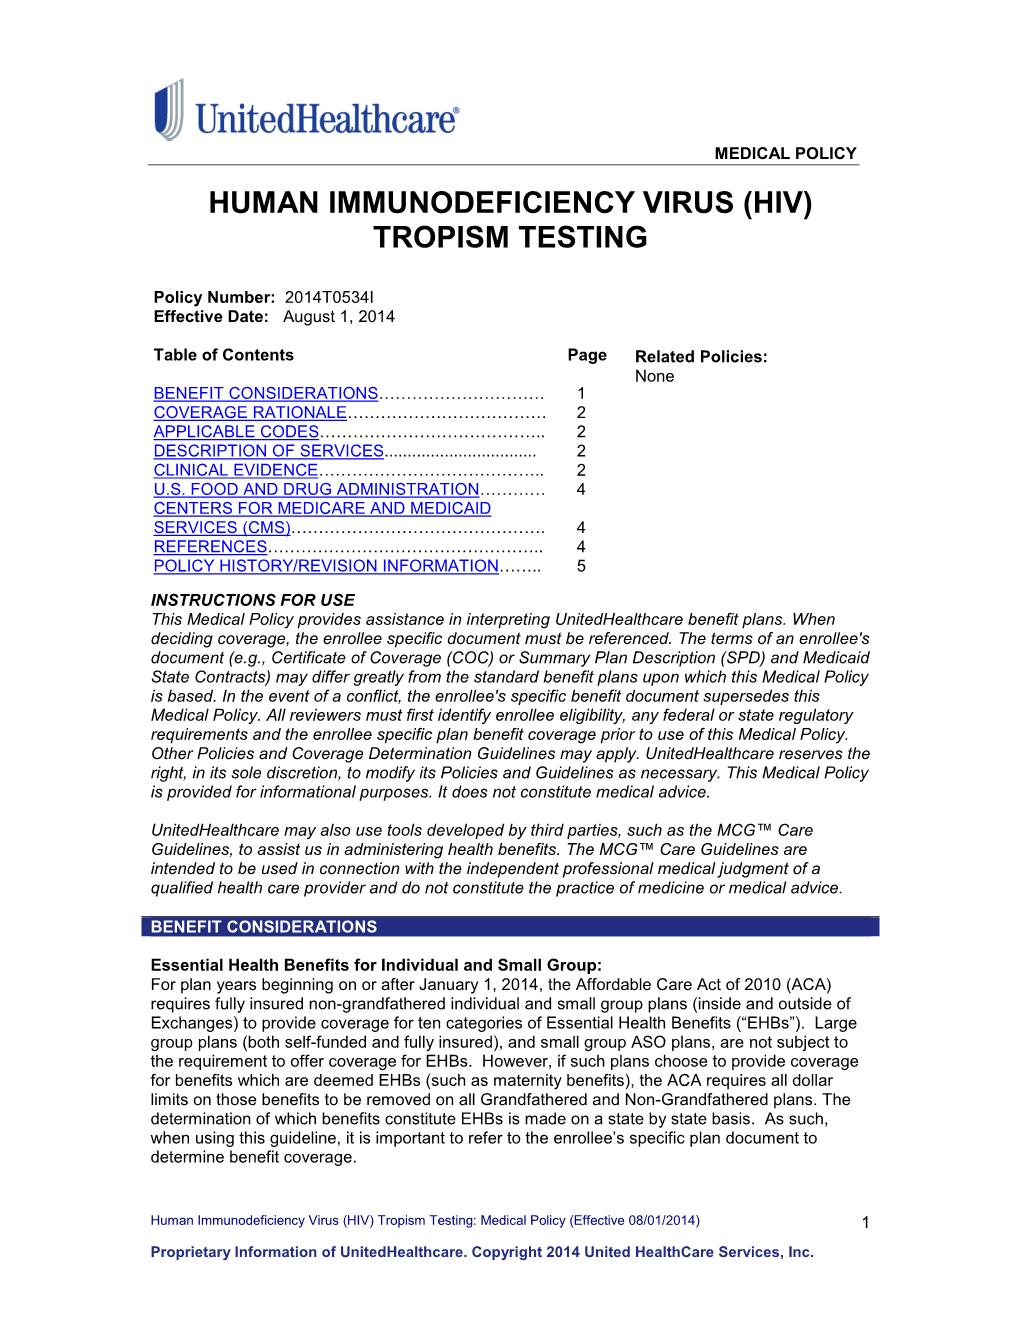 Human Immunodeficiency Virus (Hiv) Tropism Testing